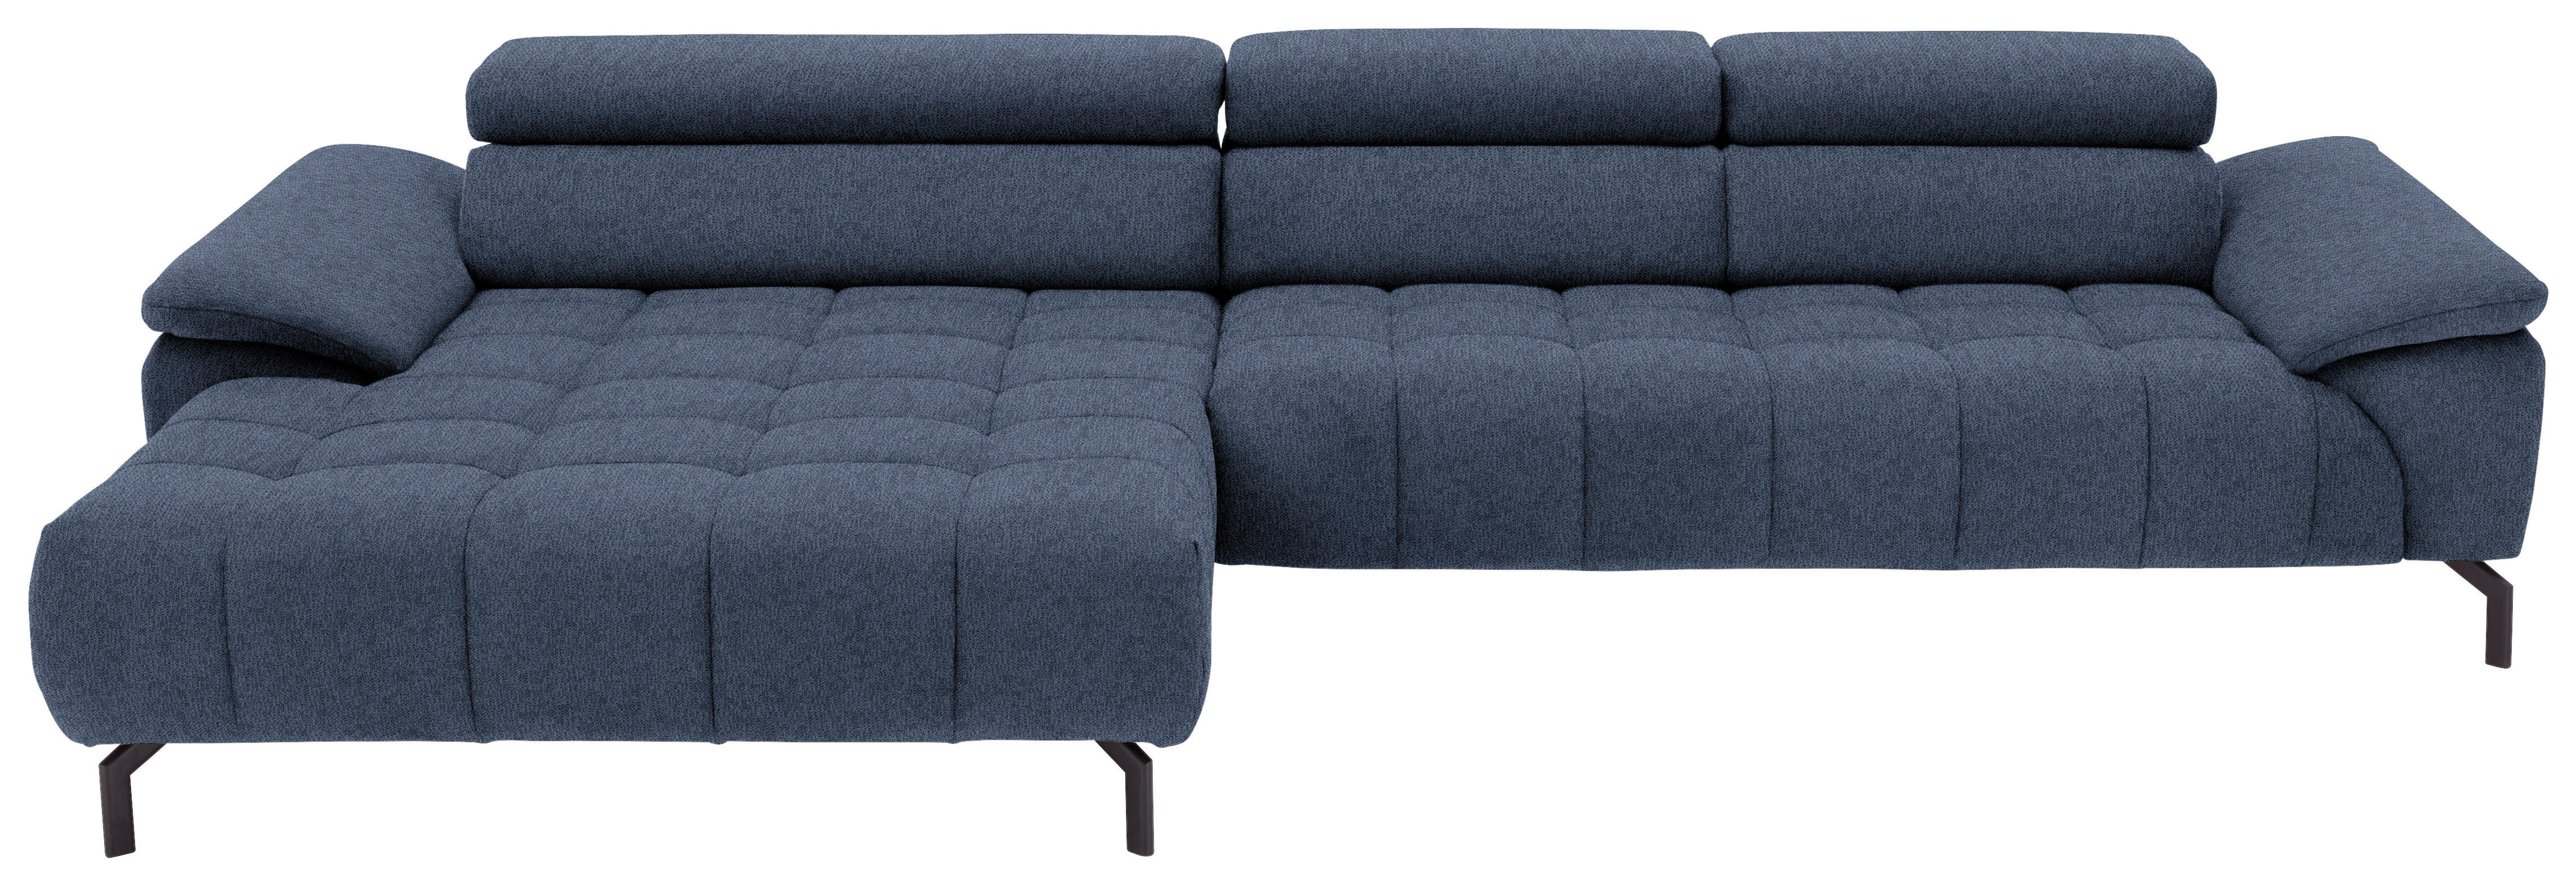 ECKSOFA in Webstoff Blau  - Blau/Schwarz, Design, Textil/Metall (190/329cm) - Beldomo Style